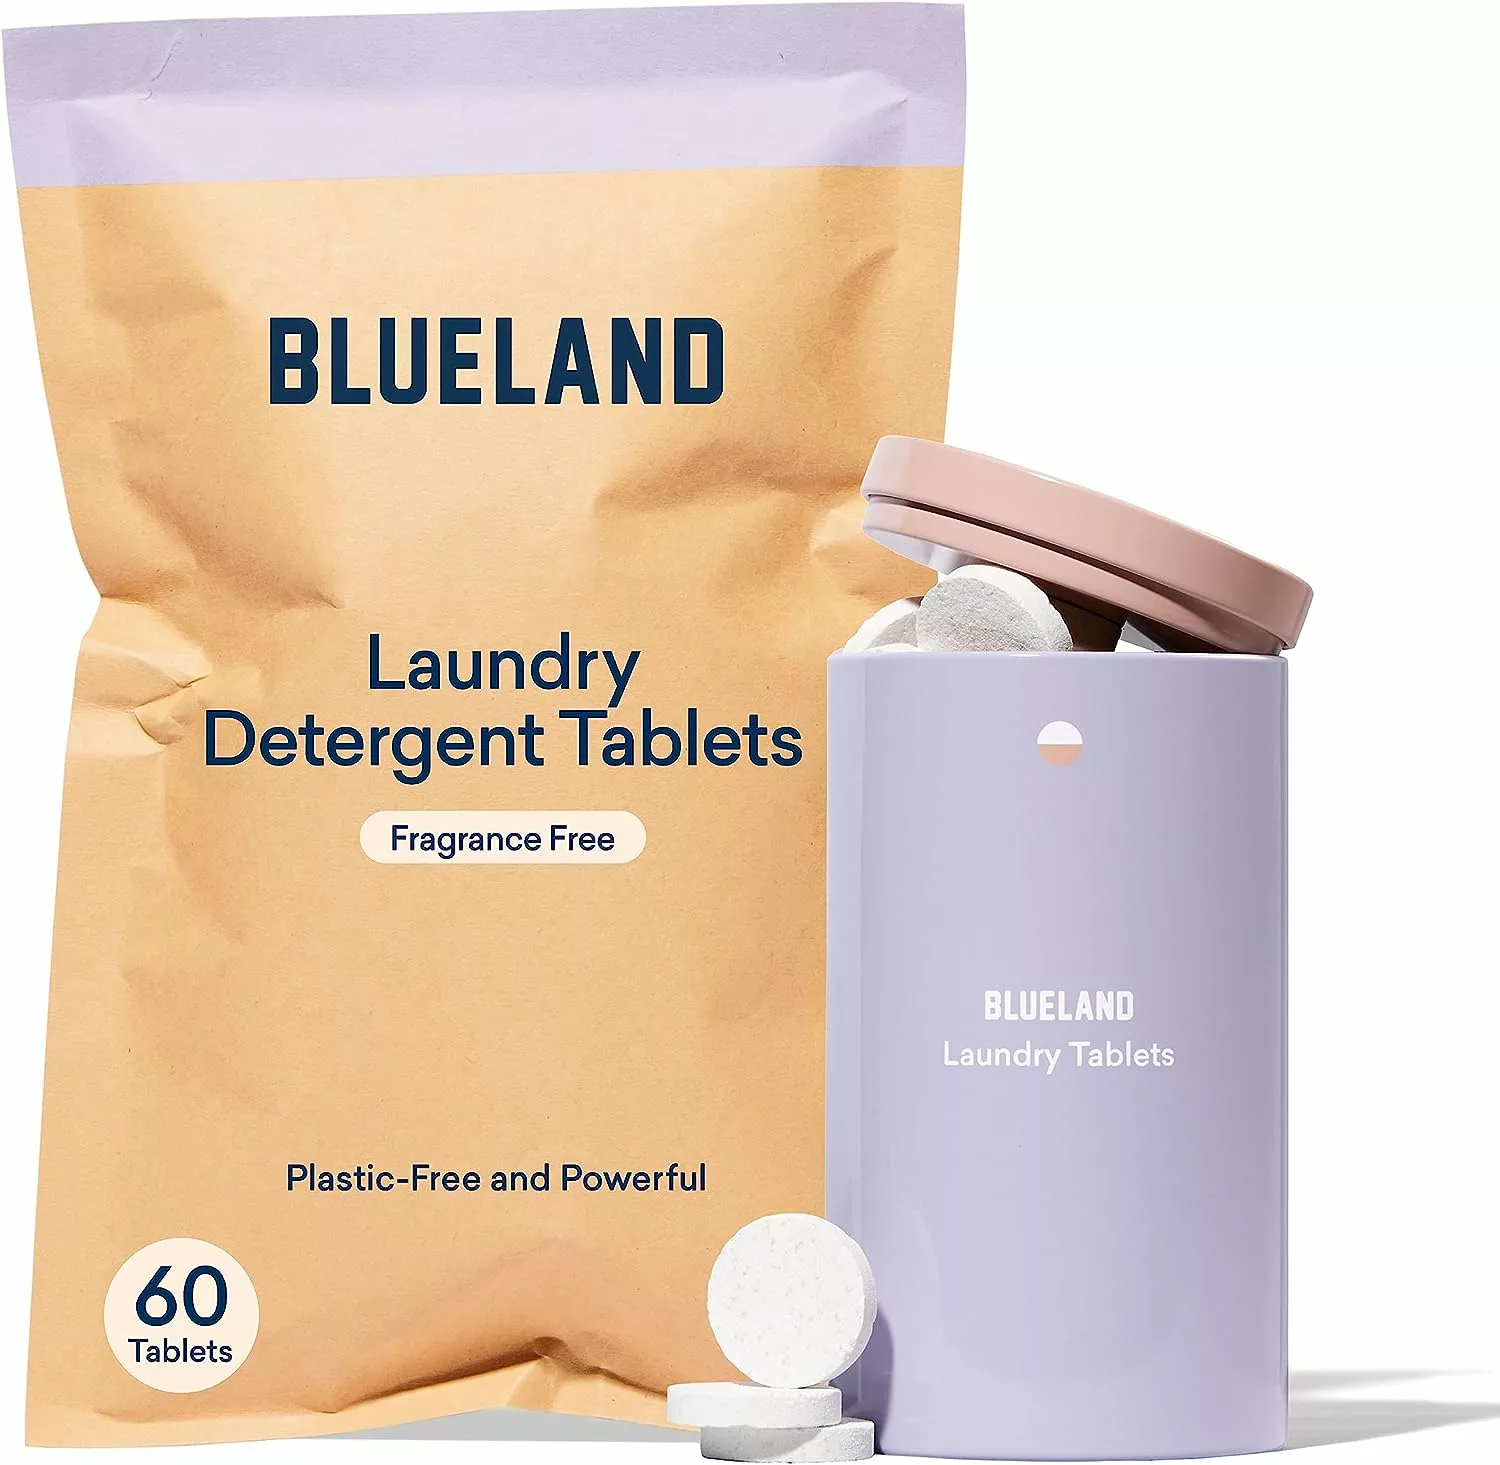 Blueland Laundry detergent